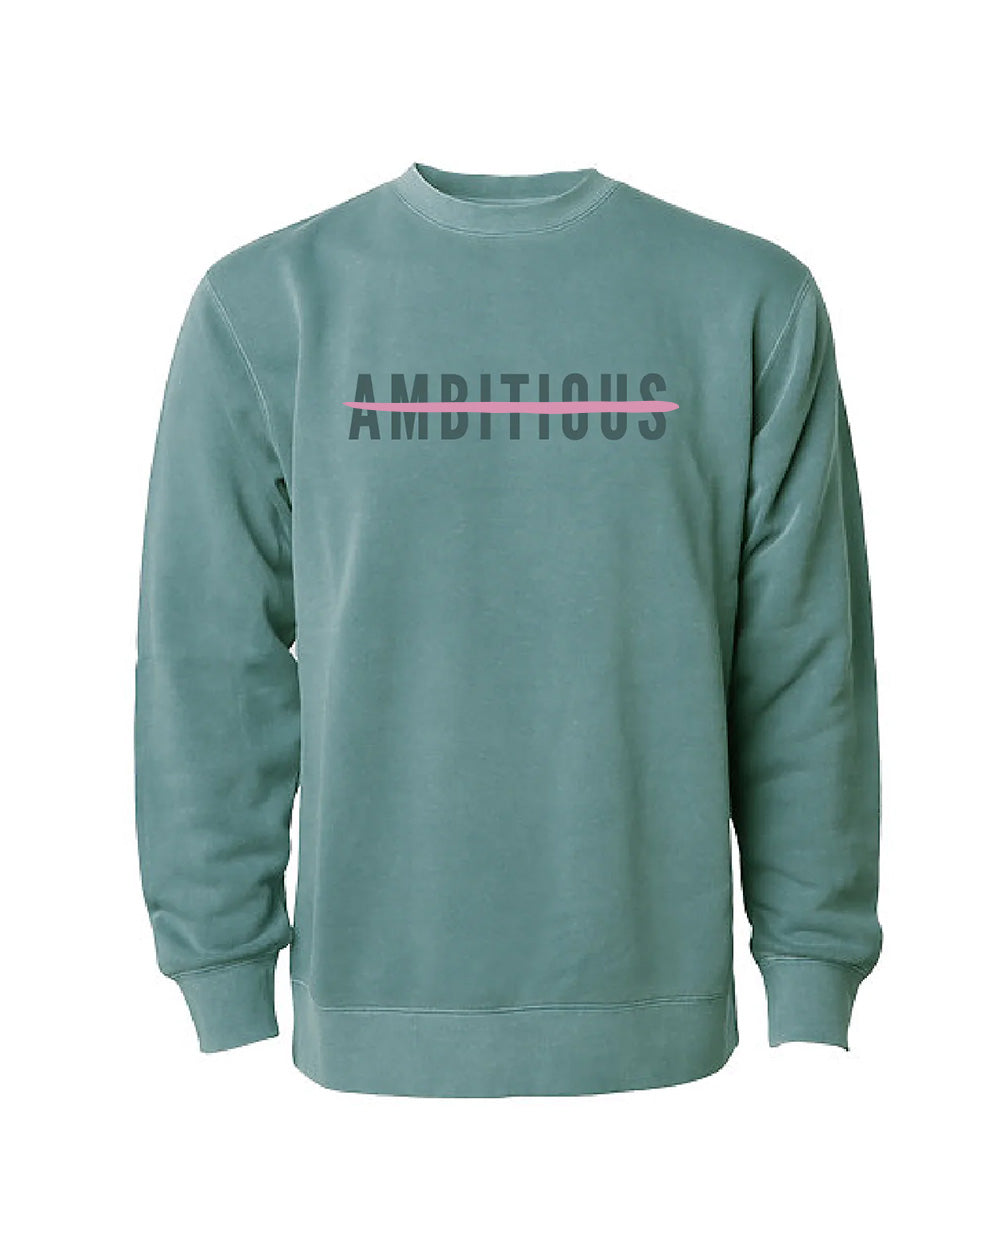 Ambitious Strikethrough Soft Garment Dye Crewneck Sweatshirt (Alpine Green)